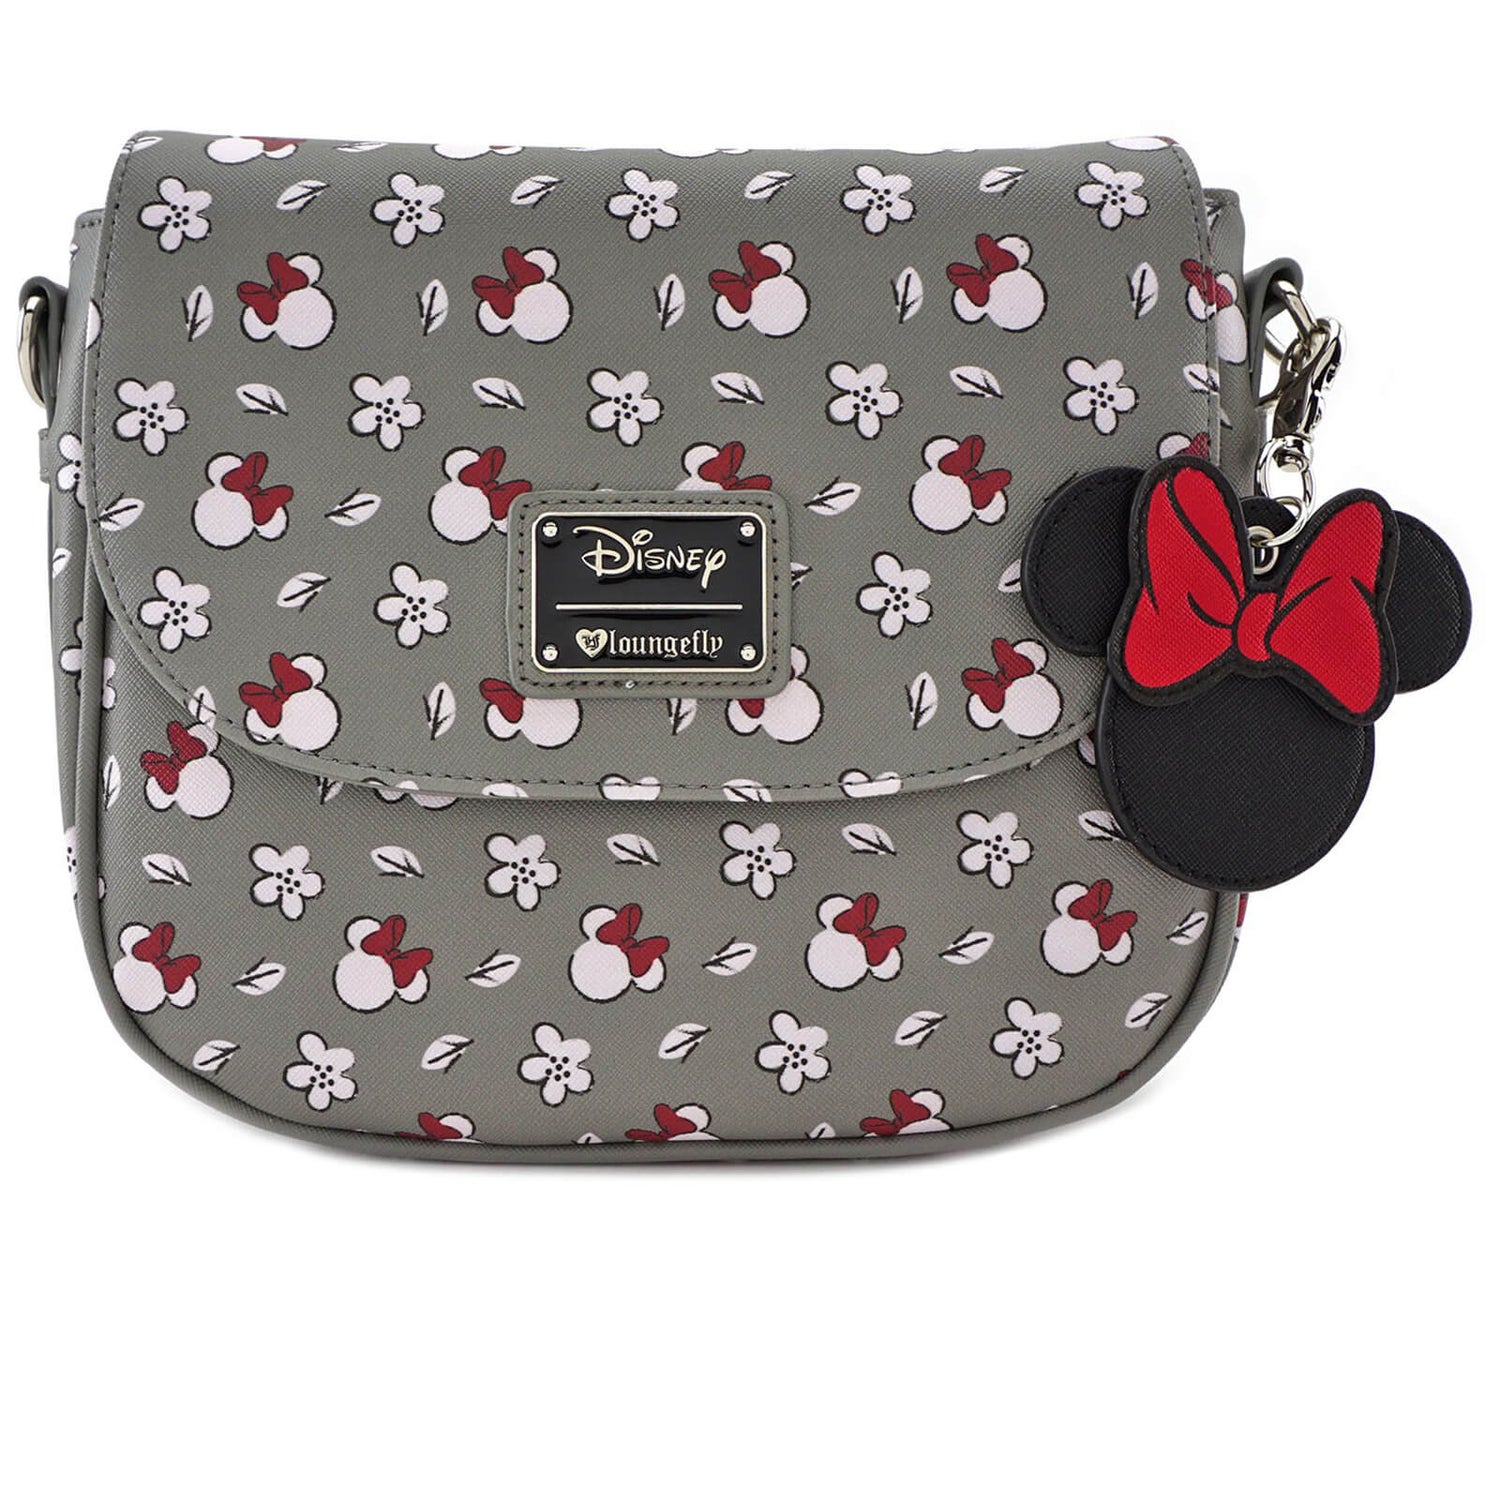 Flipkart.com | DISNEY Mickey Mouse 15 inch Polyster School Bag/Backpack For  Kids, Red & Black Waterproof School Bag - School Bag